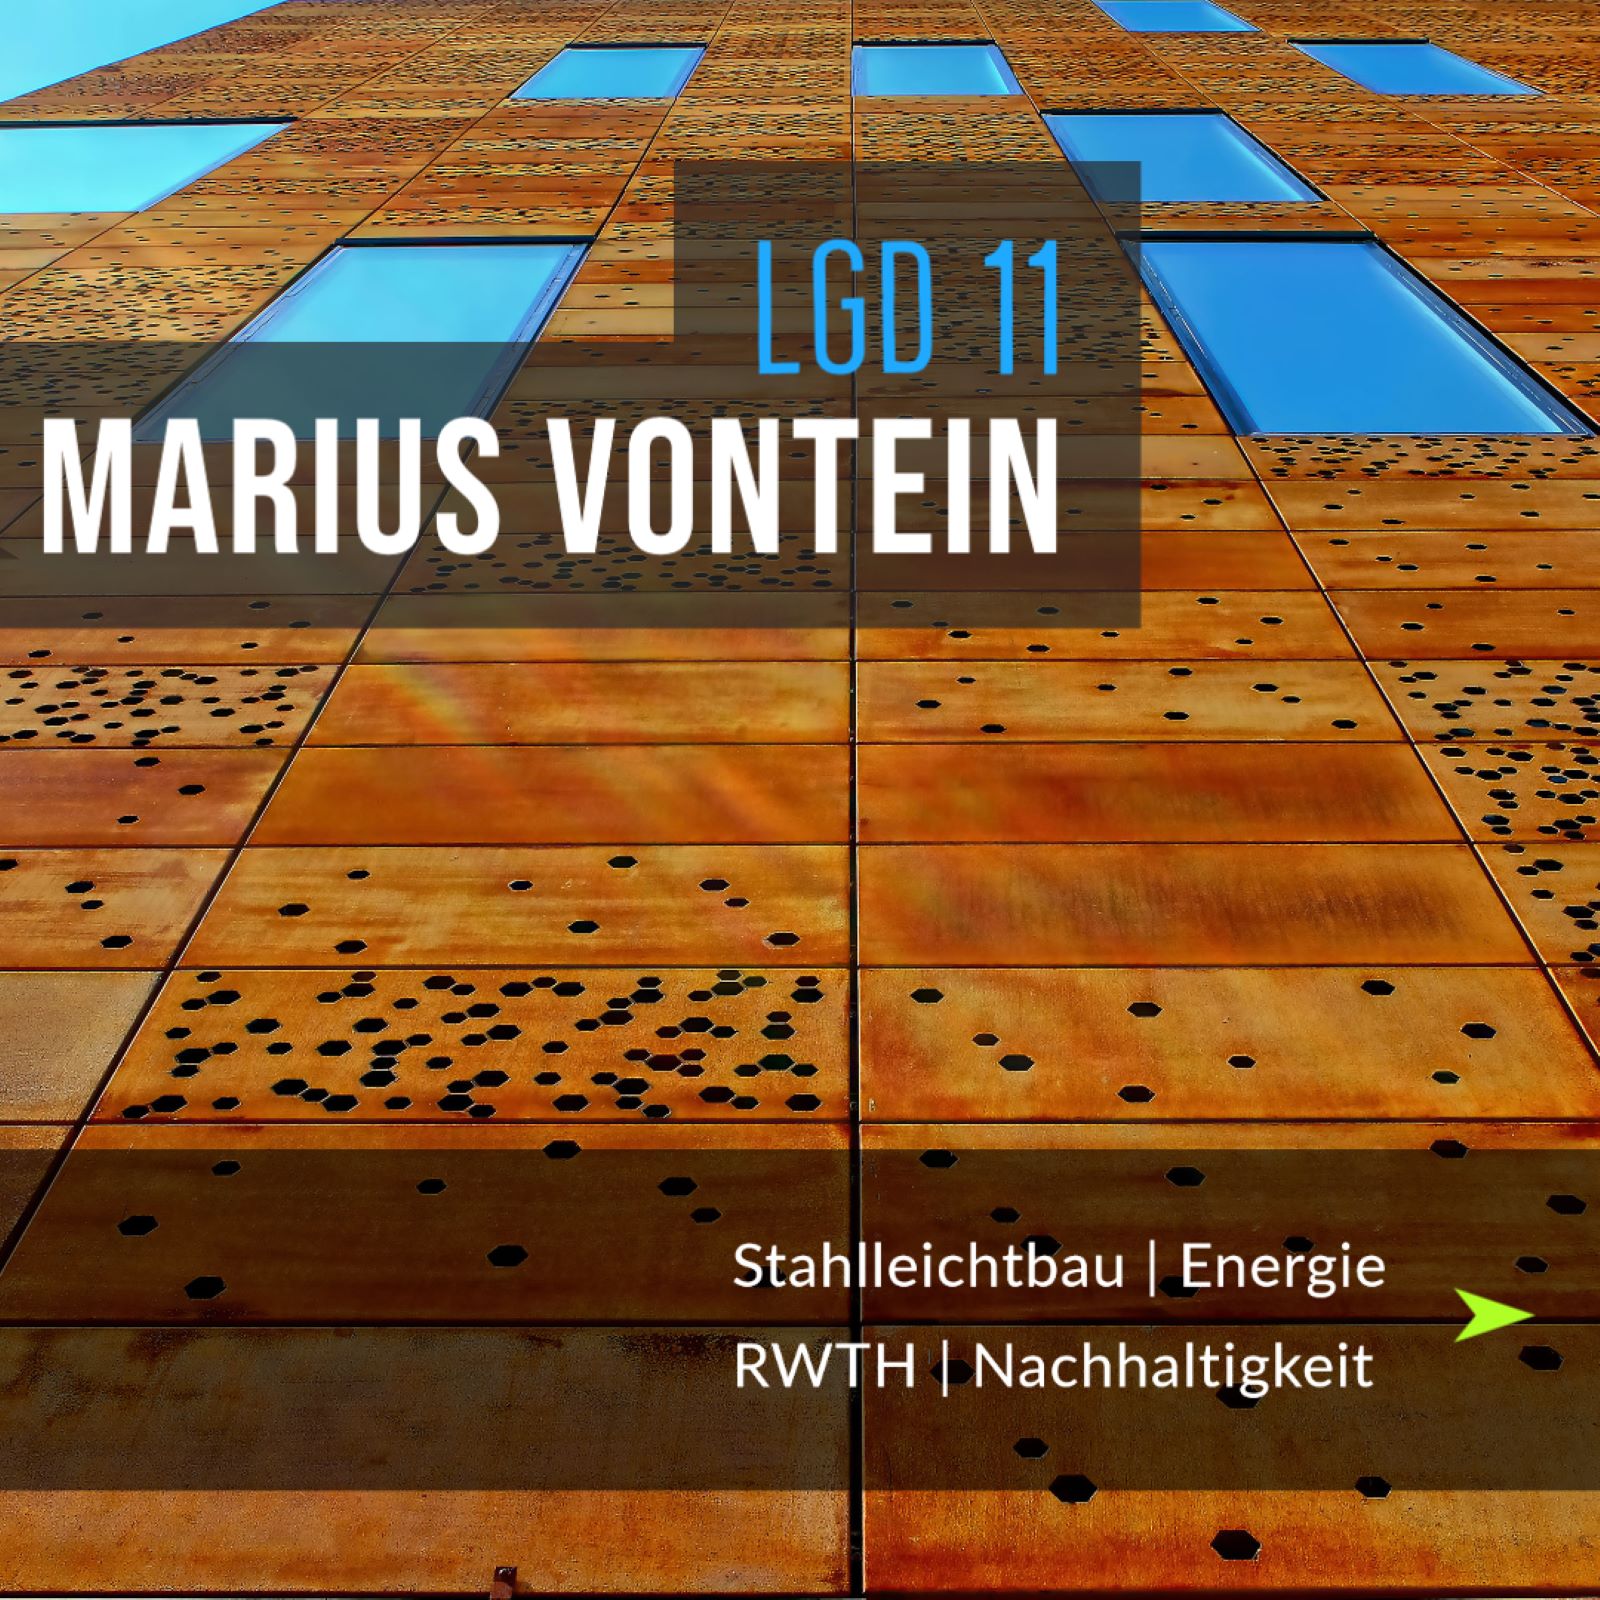 LGD 11 - Marius Vontein